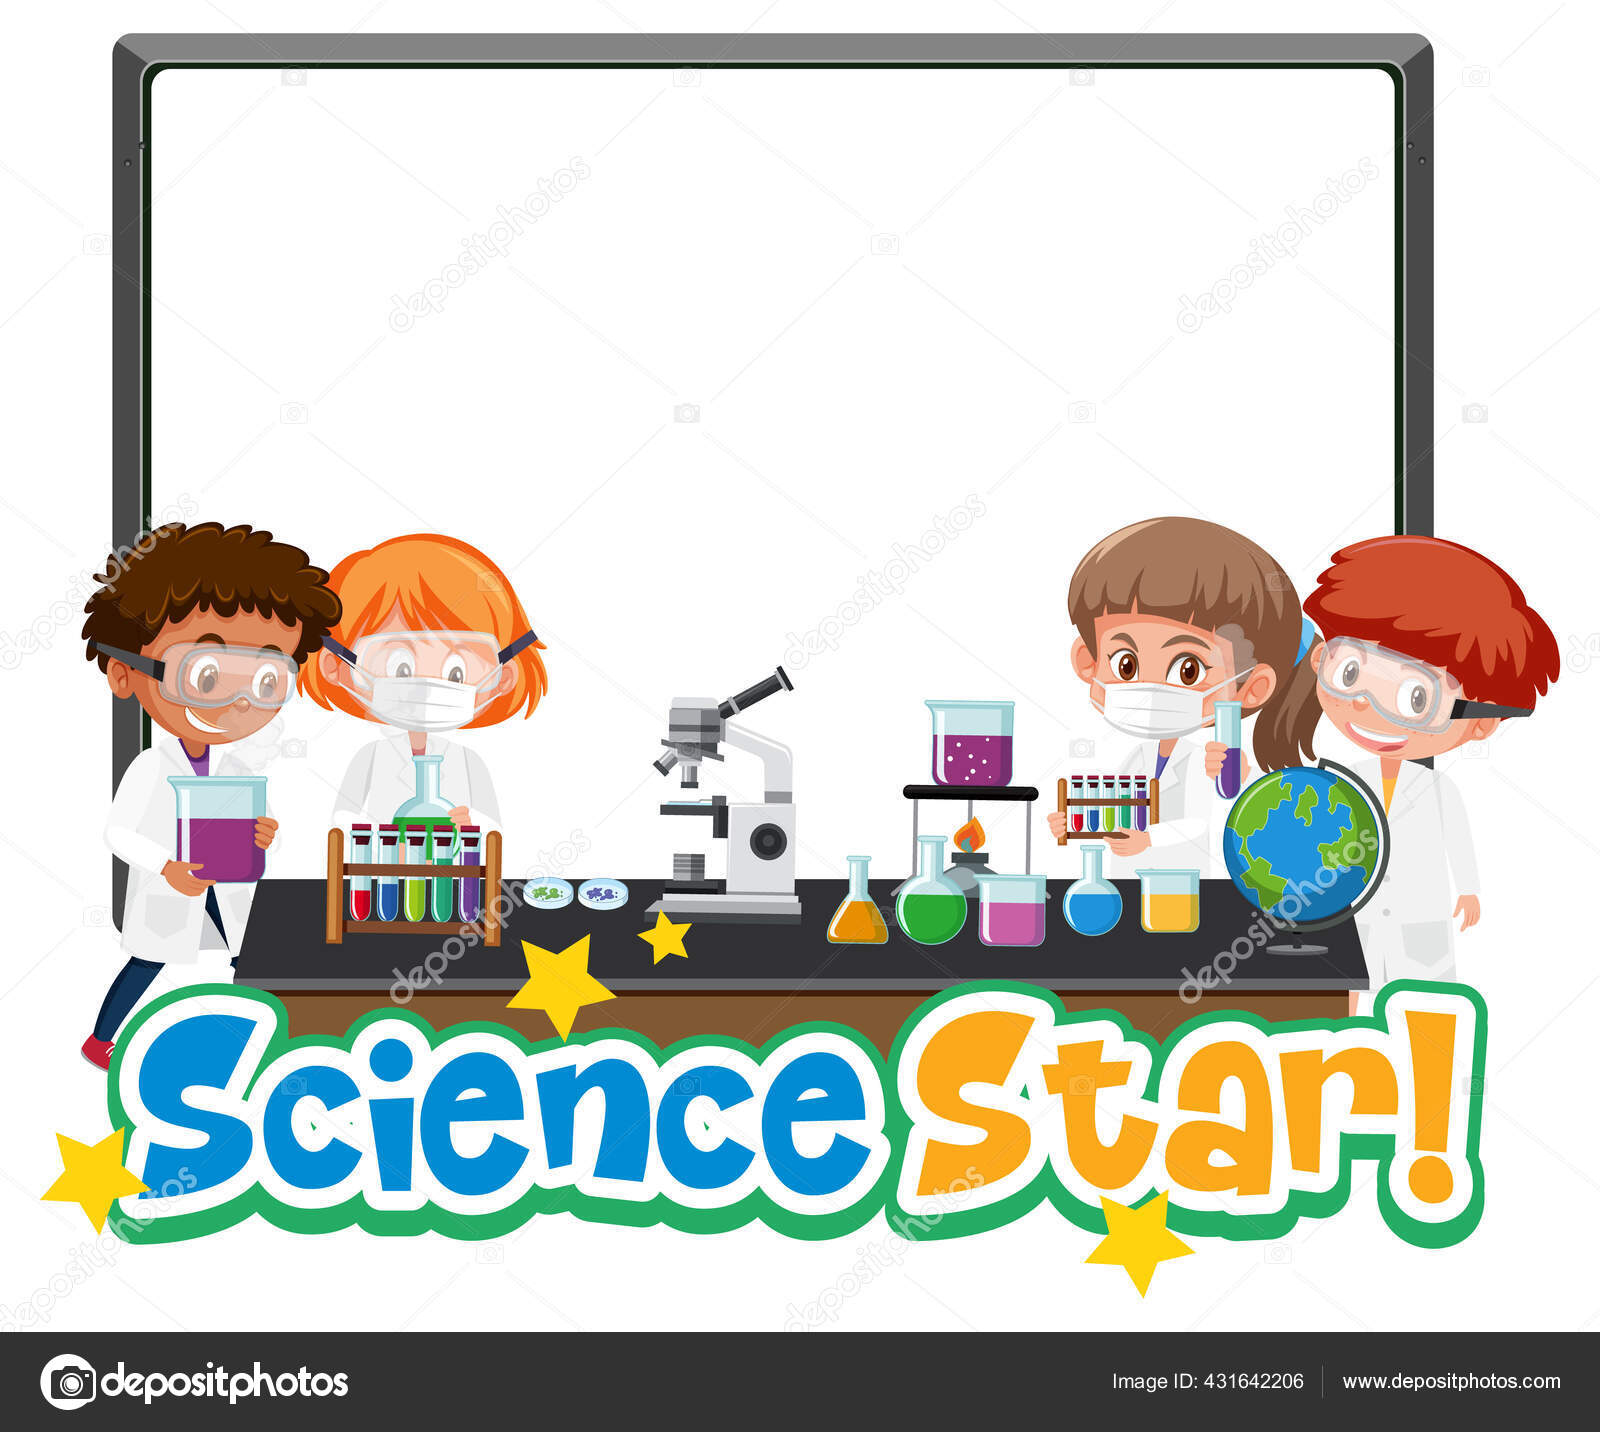 https://st2.depositphotos.com/9876904/43164/v/1600/depositphotos_431642206-stock-illustration-blank-banner-science-star-logo.jpg